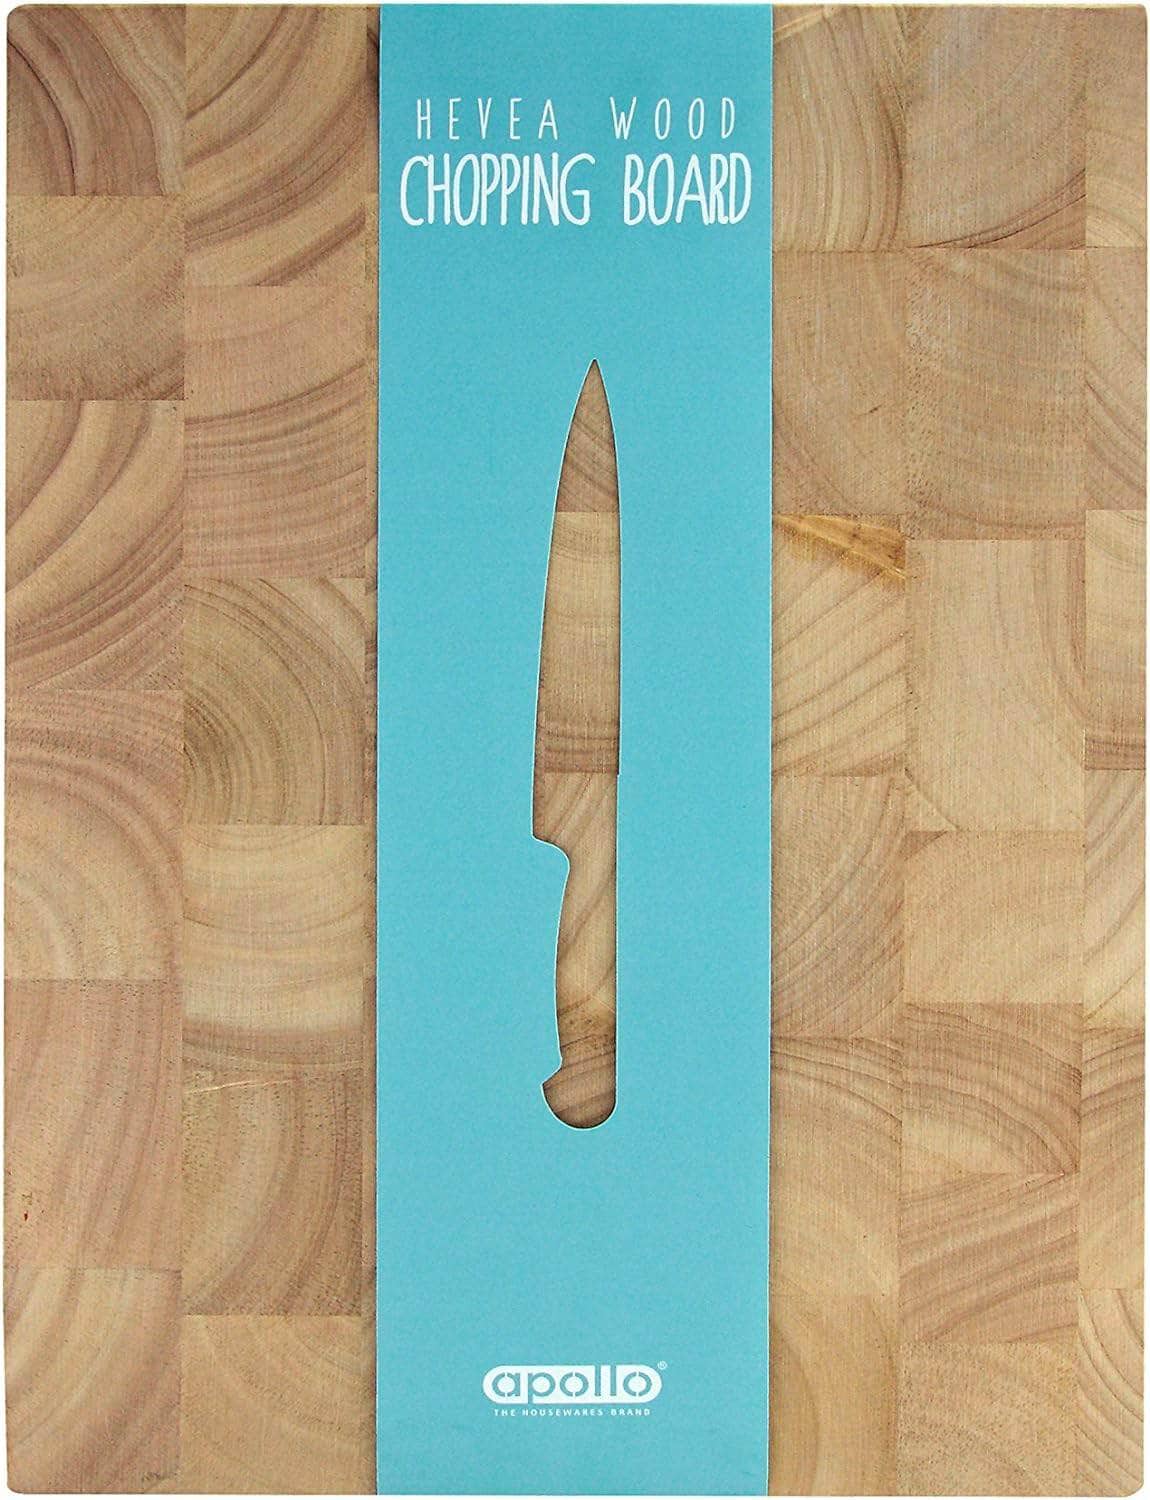 Kitchenware  -  Apollo Endgrain Chopping Board  -  50143321